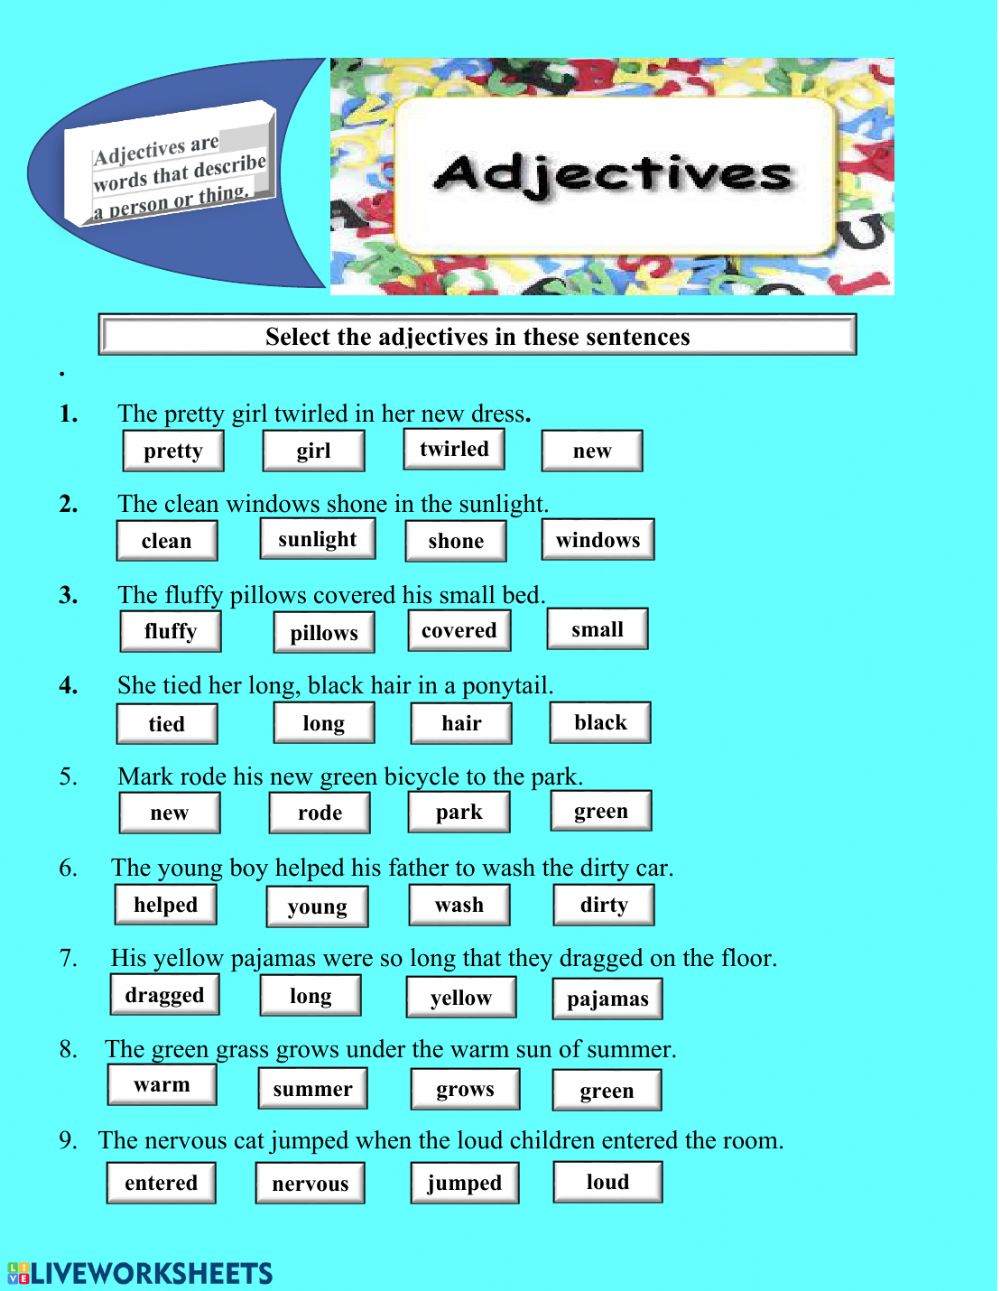 adjectives-online-pdf-activity-for-grade-3-adjectiveworksheets